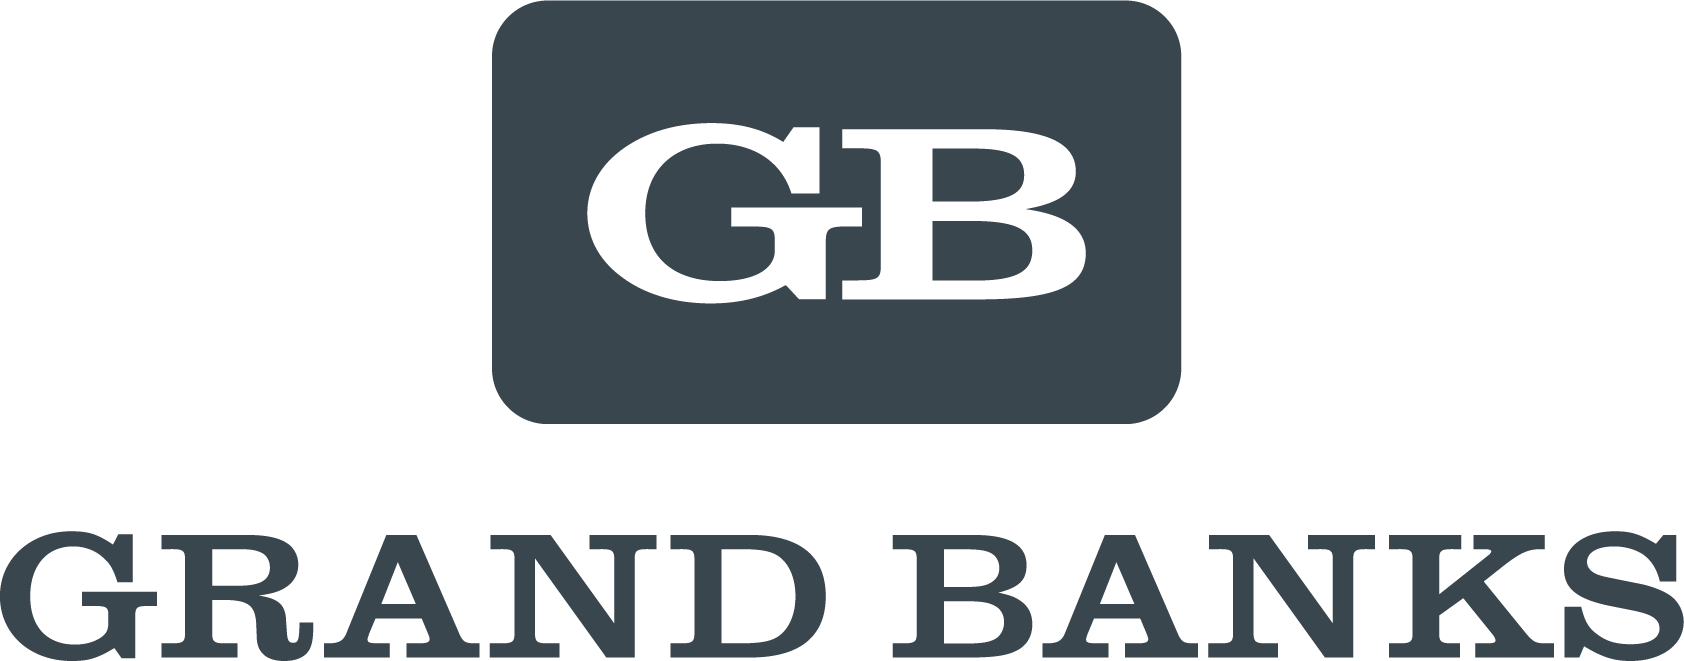 Grand Banks logo